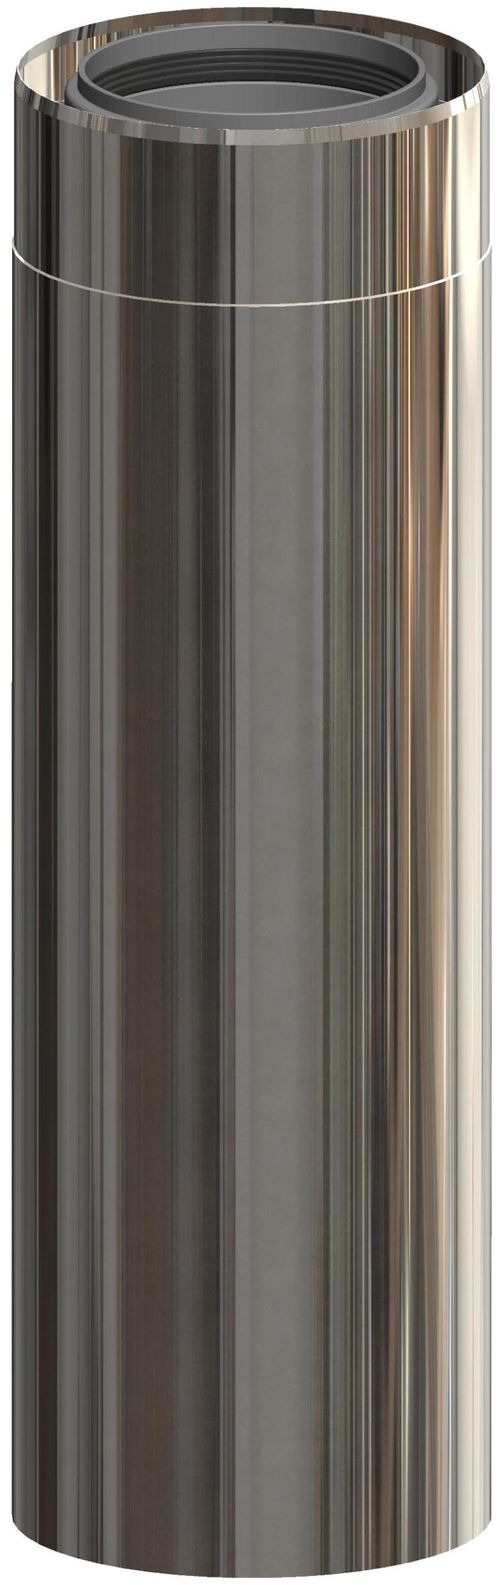 ATEC-Rohrelement-440mm-DN110-160-Edelstahl-b-Edelstahl-blank-kuerzbar-703718